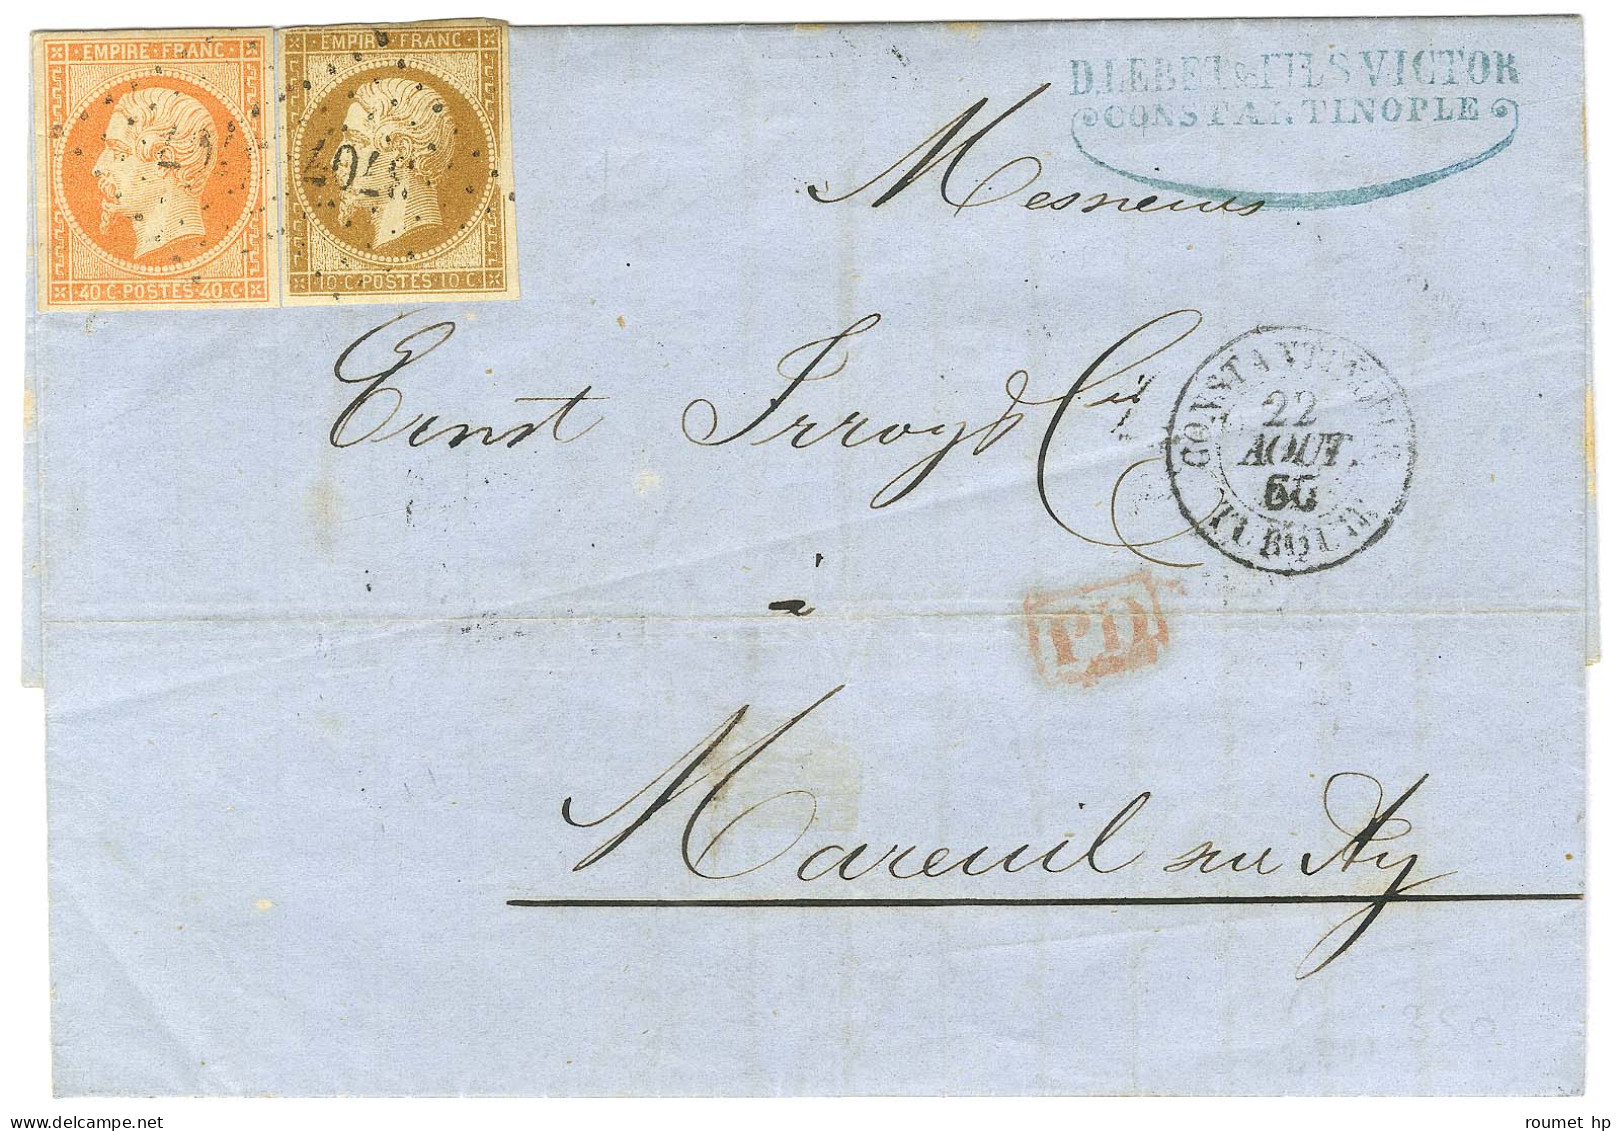 PC 3707 / N° 13 + N° 16 [les 2ex Belles Marges] Càd CONSTANTINOPLE / TURQUIE Sur Lettre Pour Mareuil (Marne). 1860. - SU - Correo Marítimo